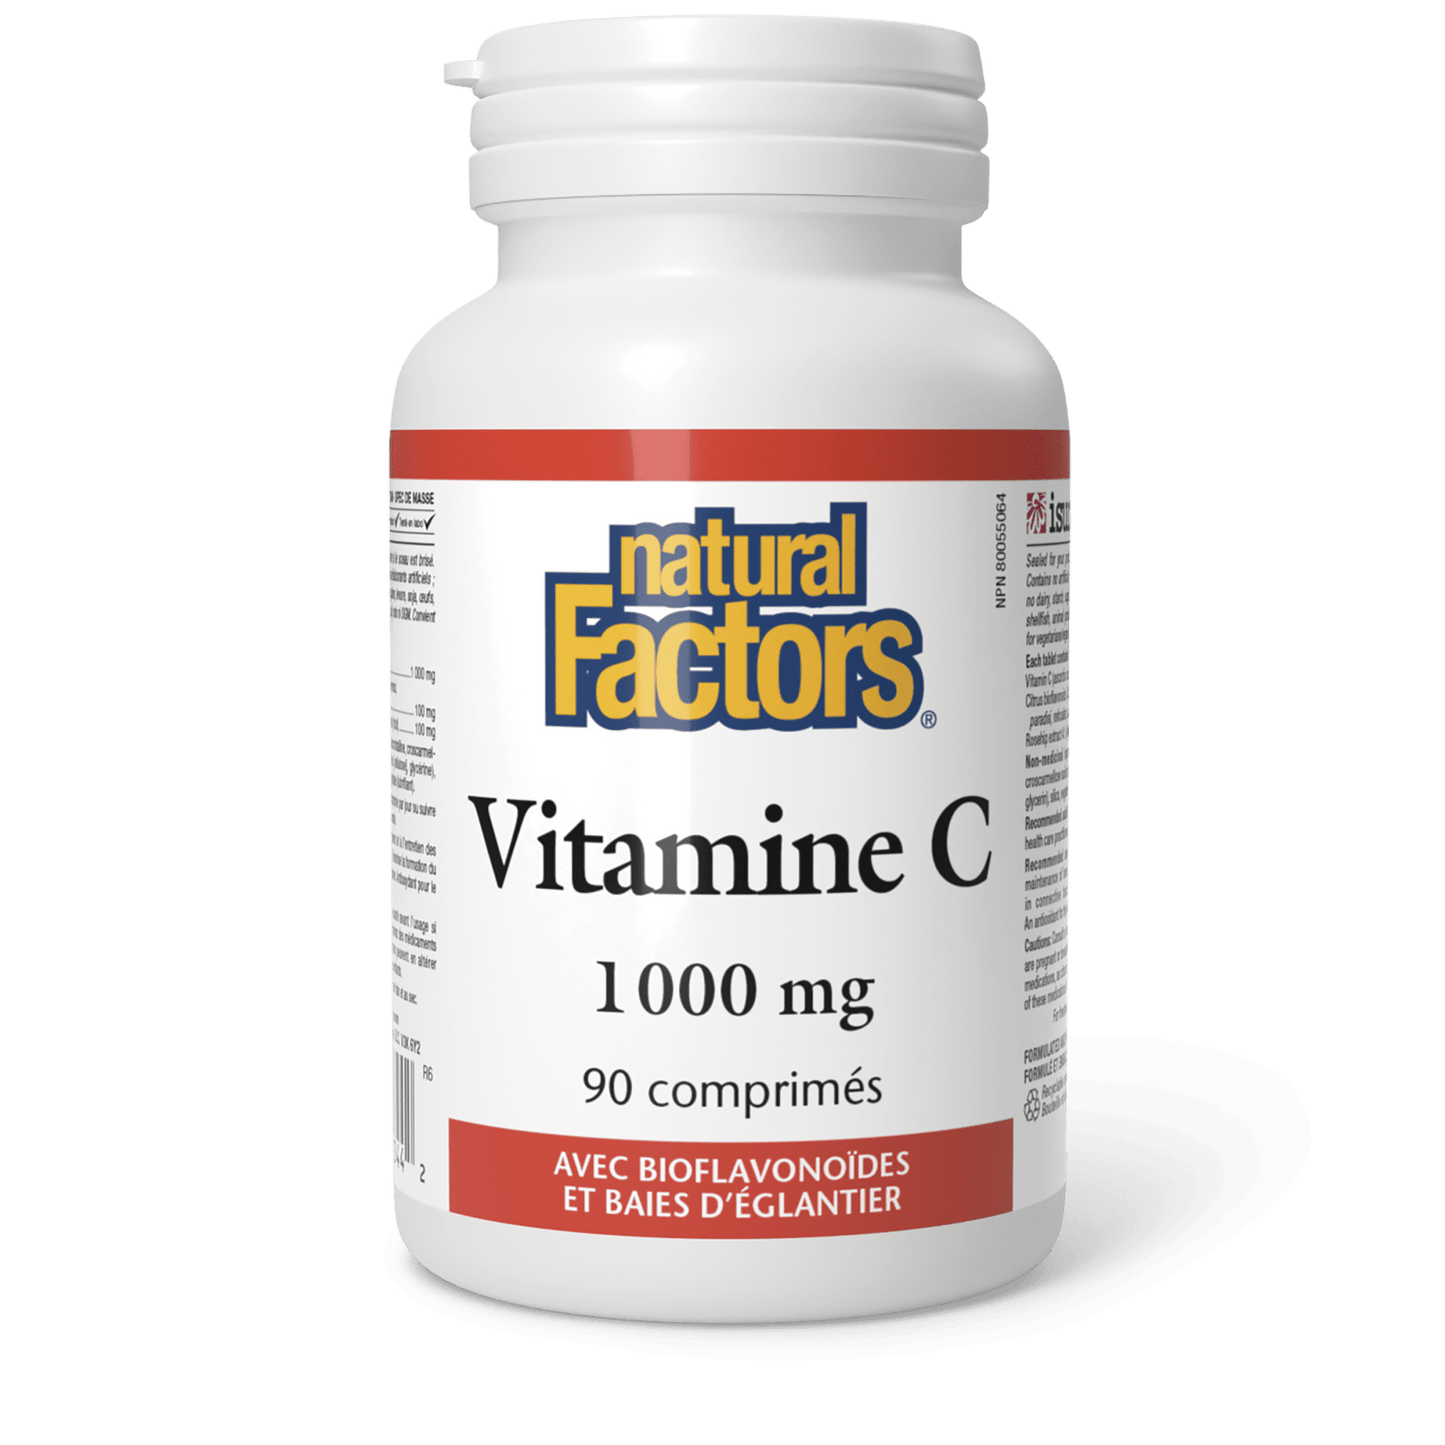 Vitamine C 1 000 mg, Natural Factors|v|image|1344